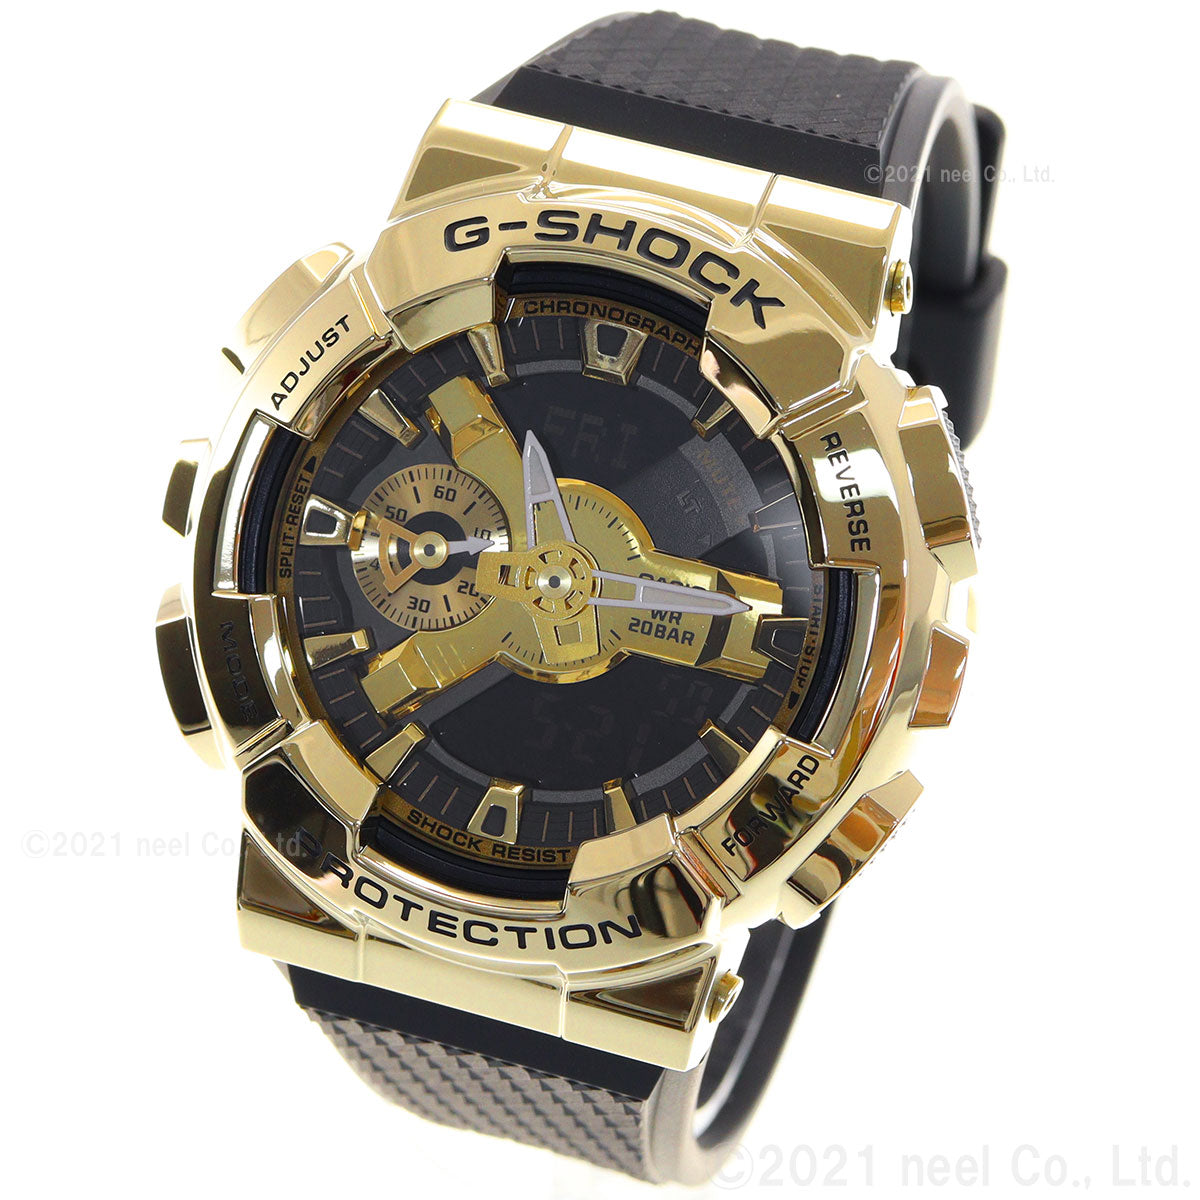 G-SHOCK カシオ Gショック CASIO 腕時計 メンズ GM-110G-1A9JF